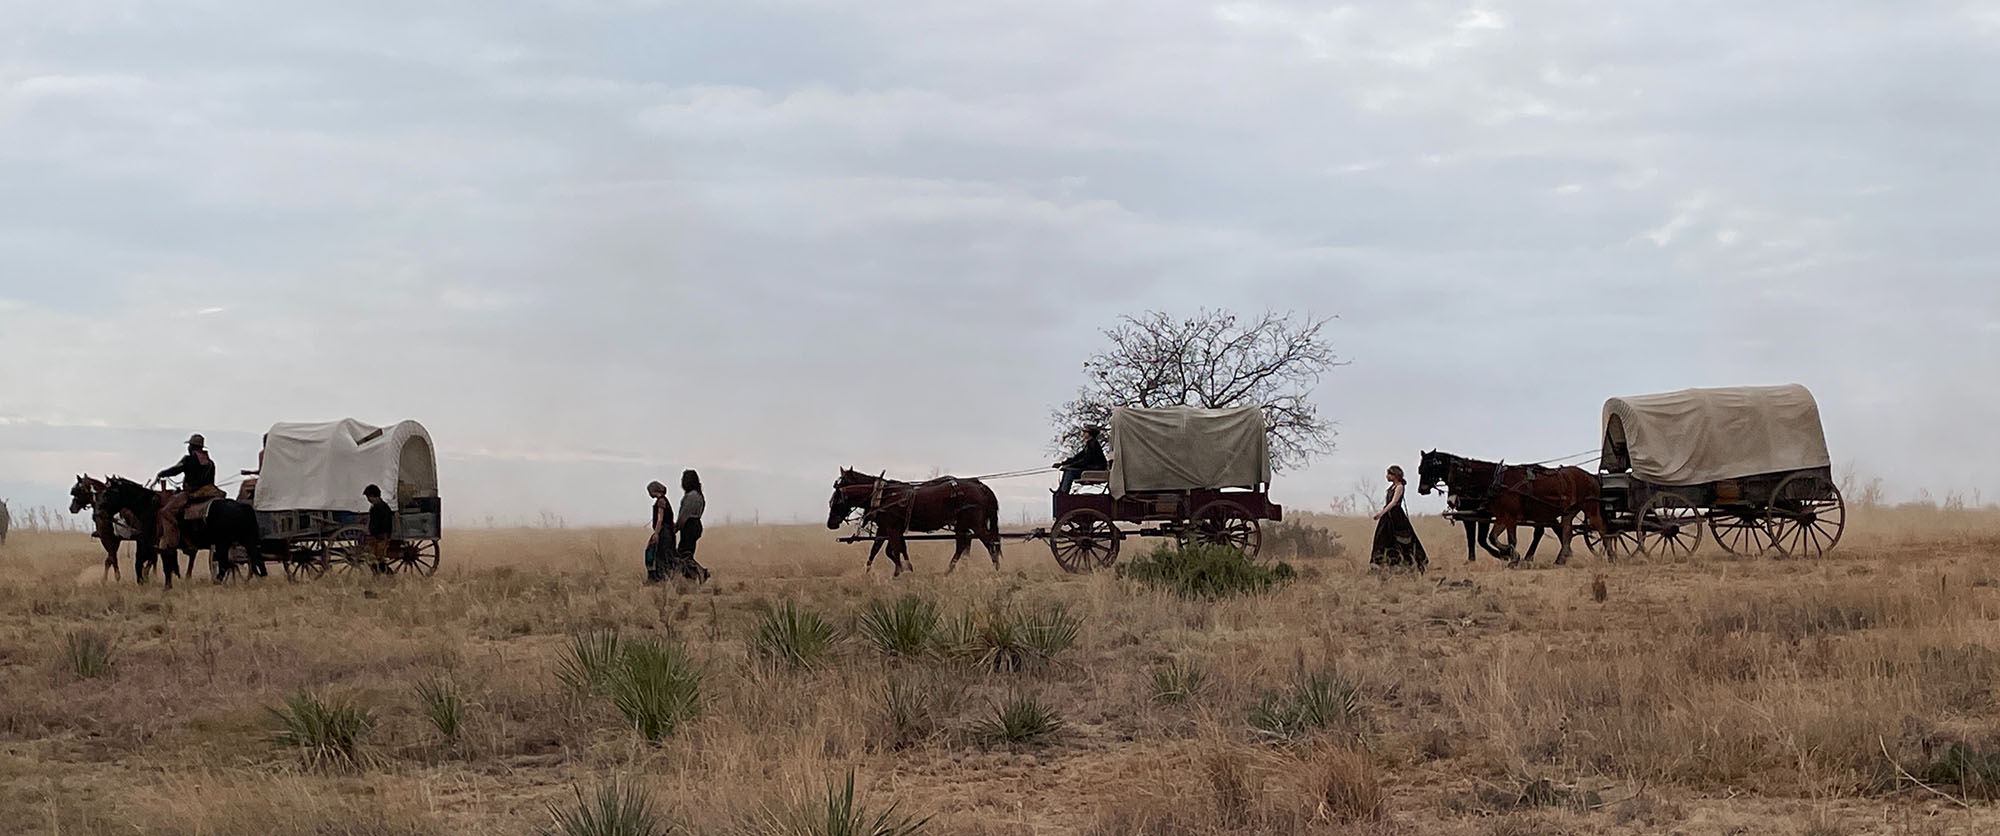 wagon train scene from Yellowstone